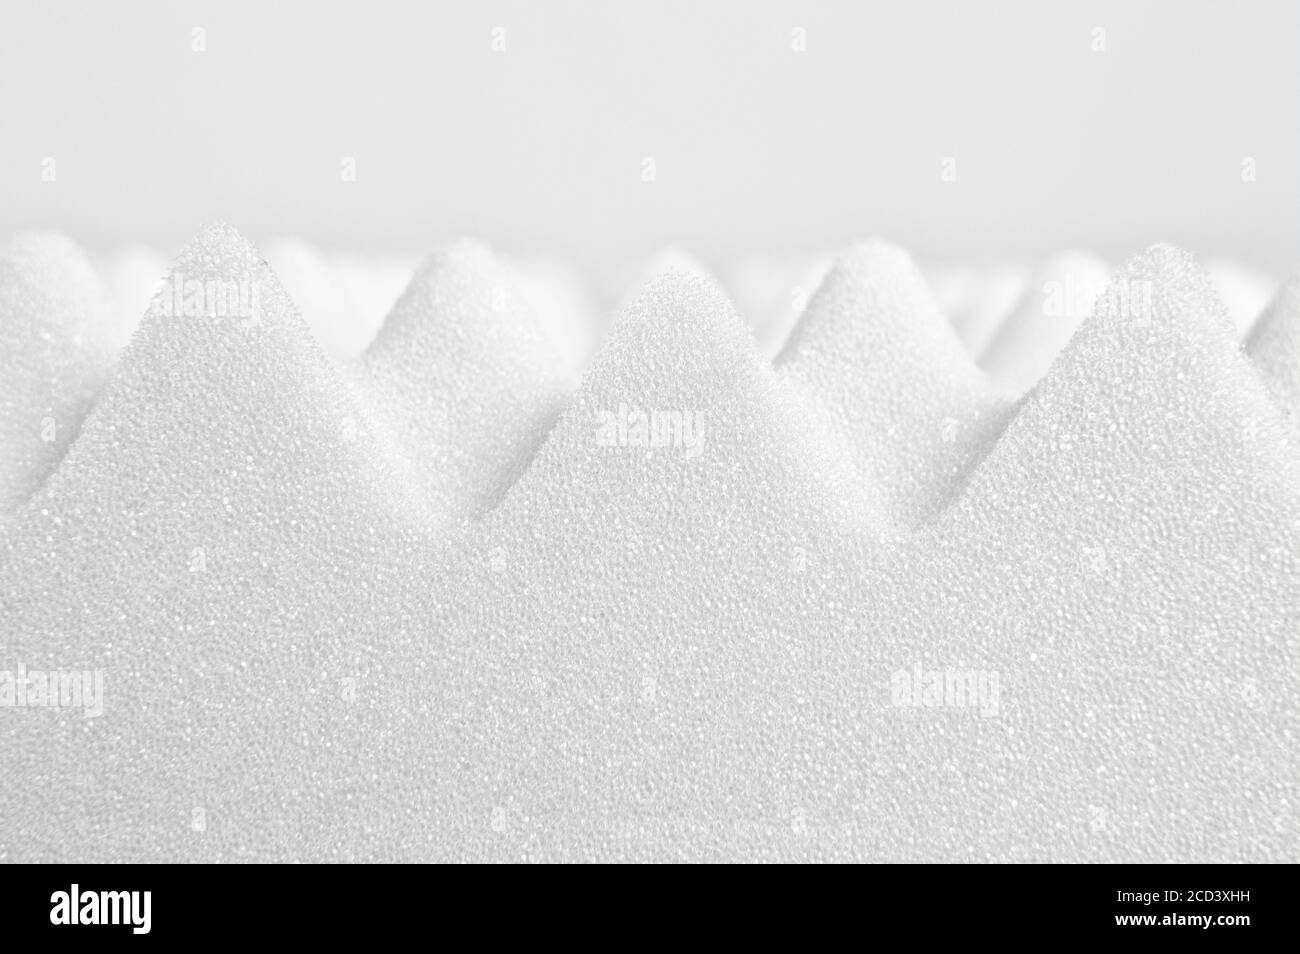 Selective focus details of memory foam texture Stock Photo